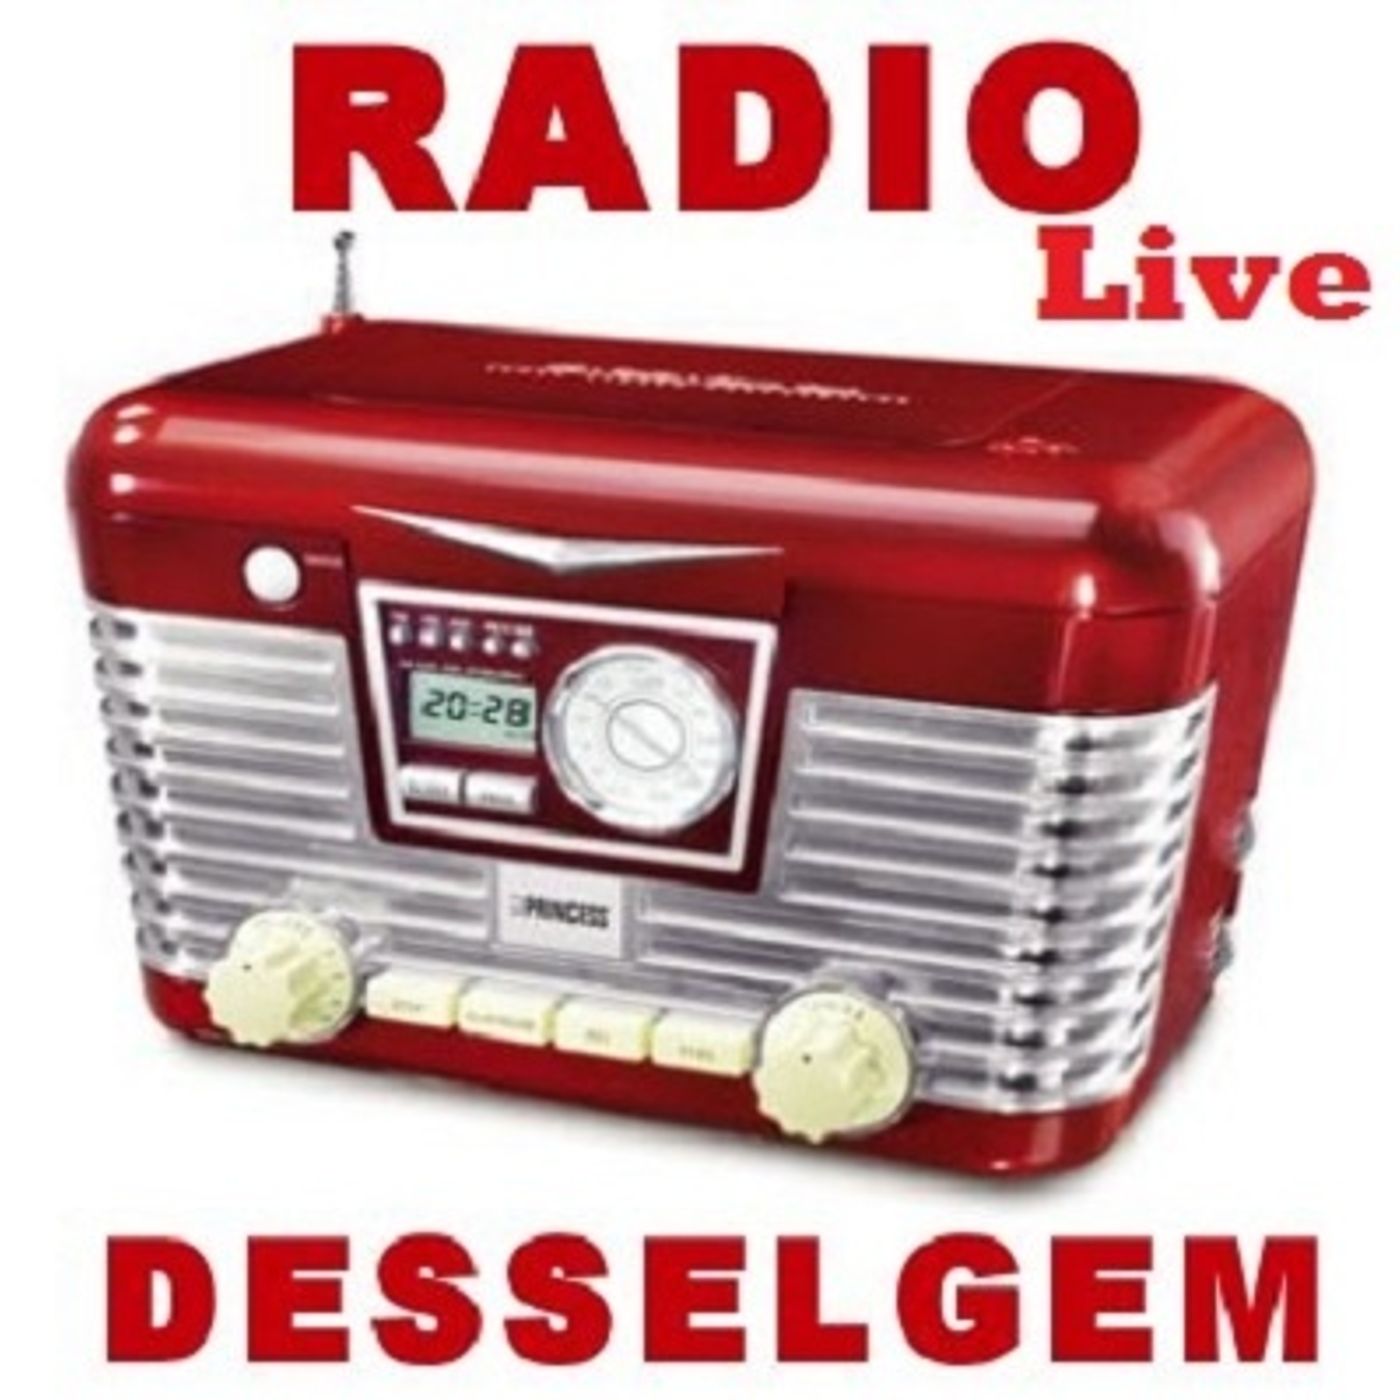 Radio Desselgem live